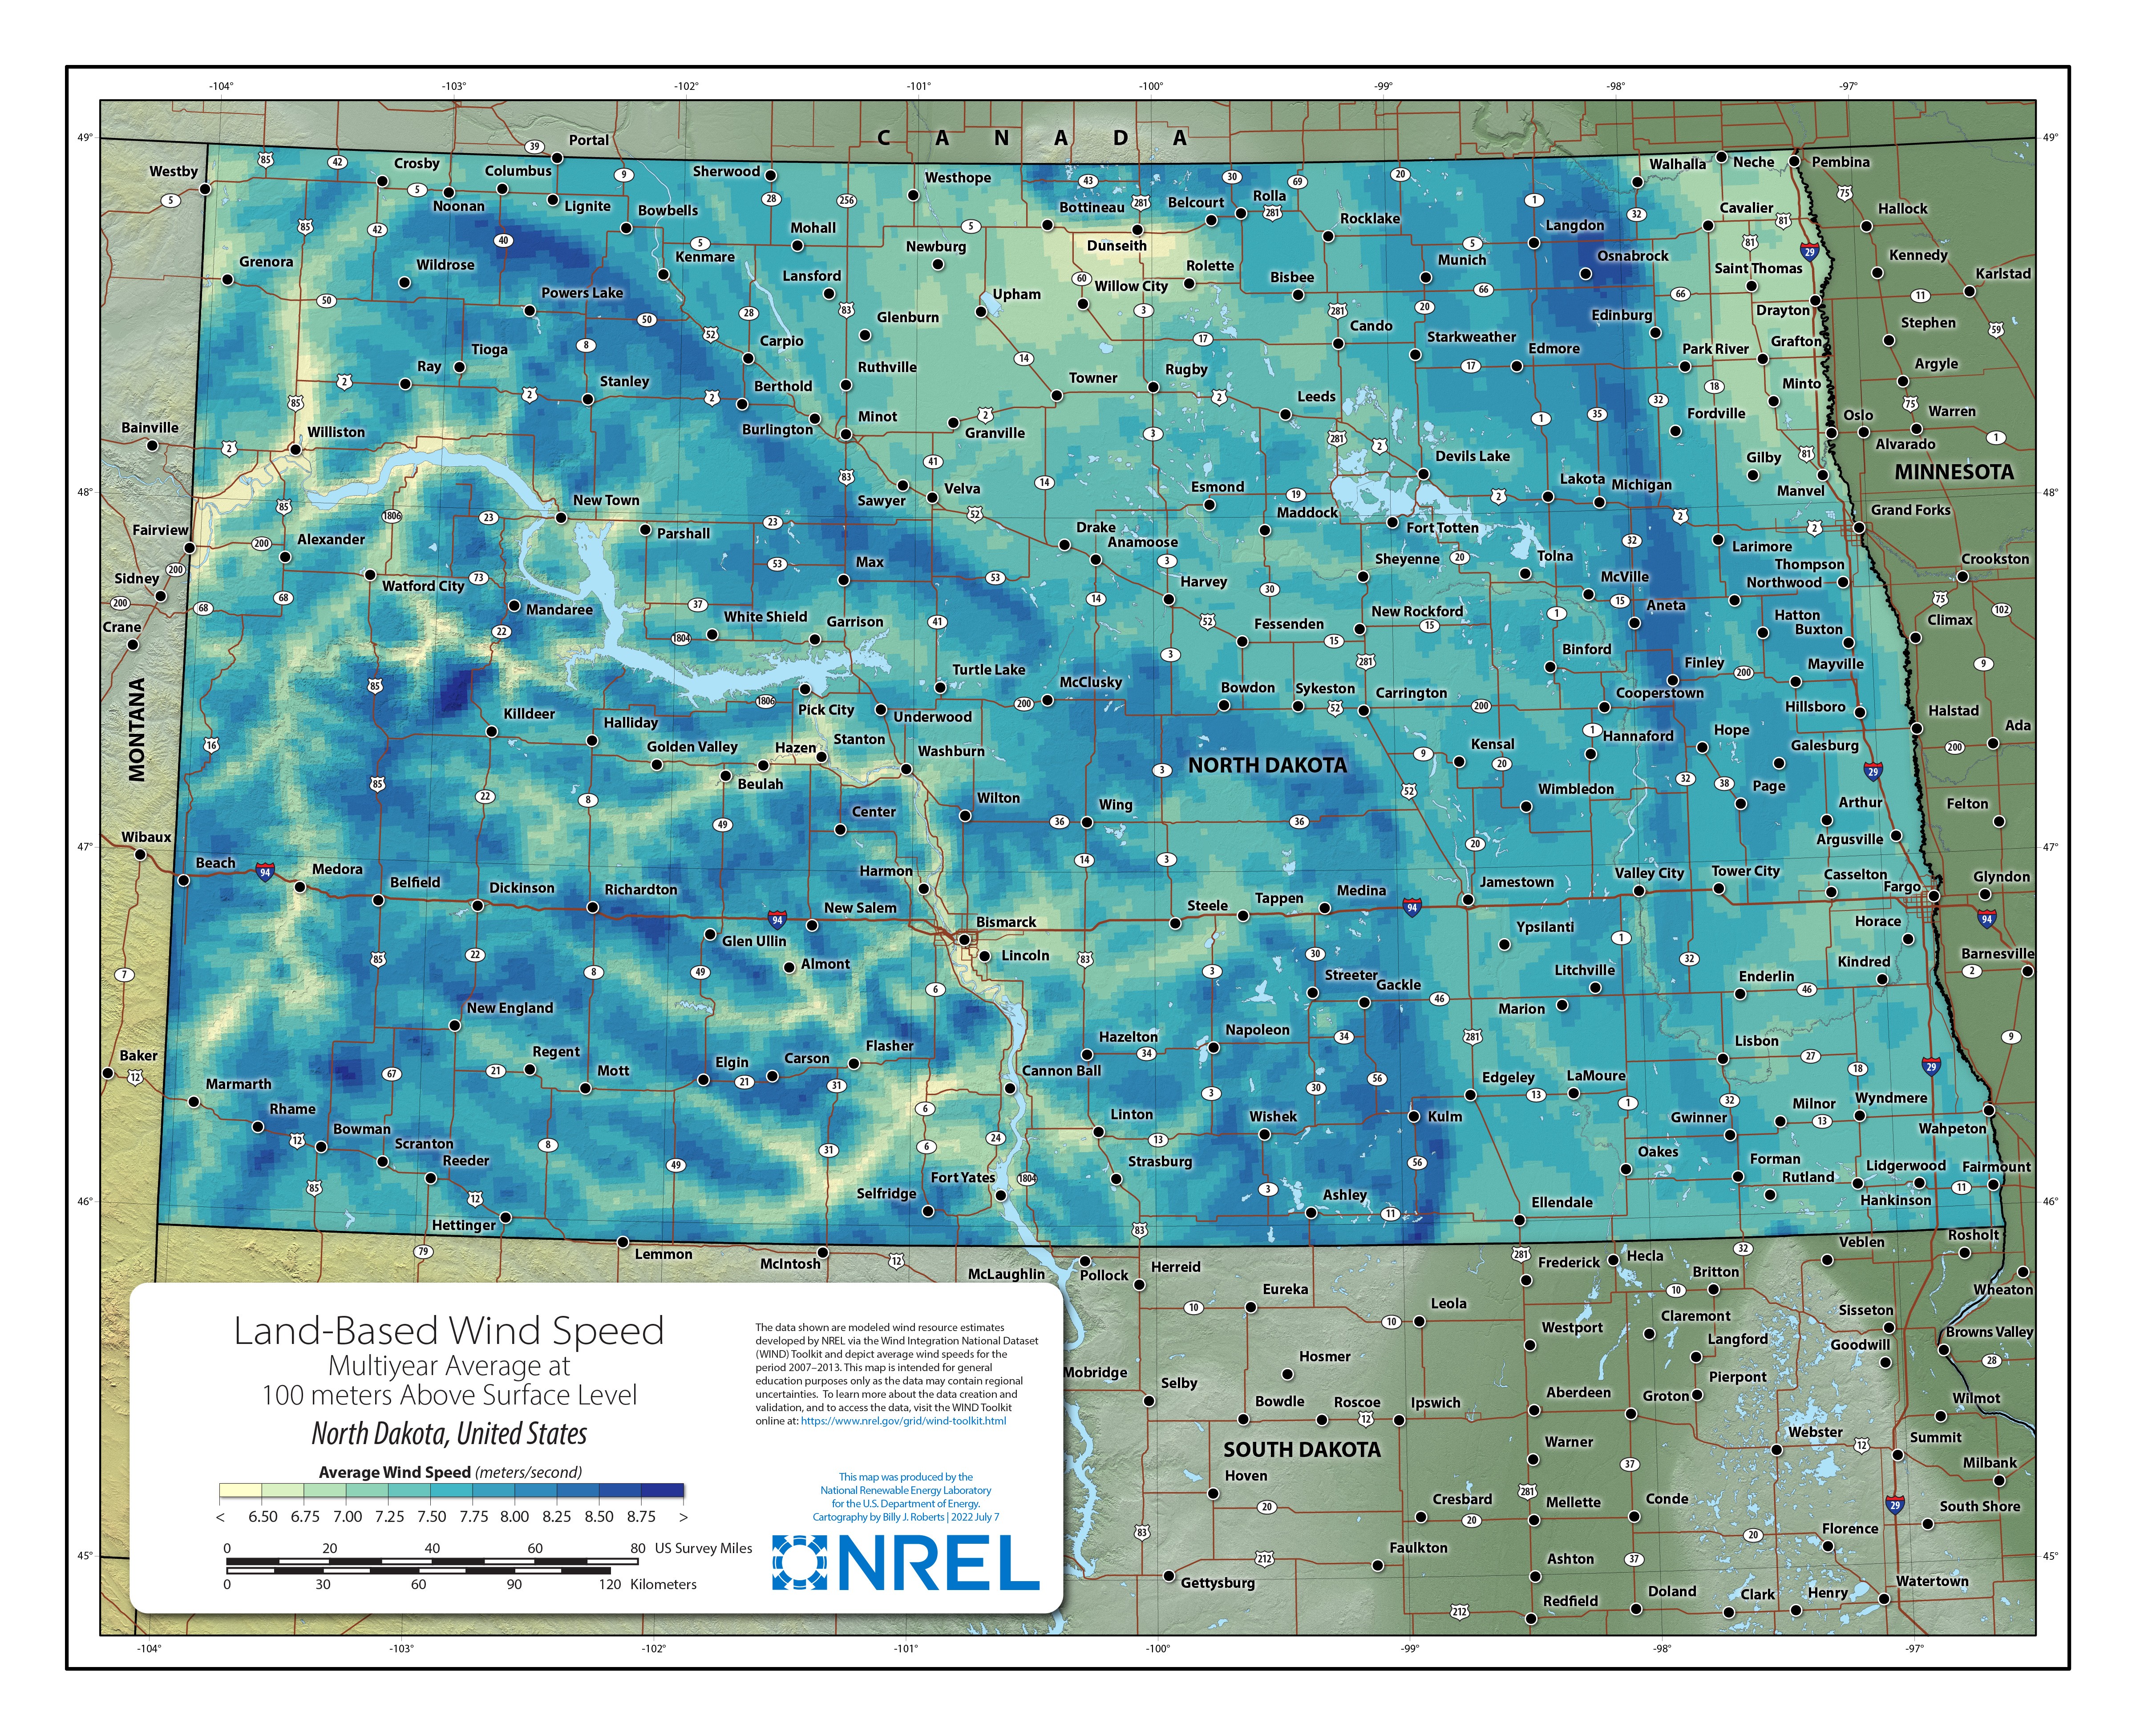 North Dakota Land-Based Wind Speed at 100 Meters